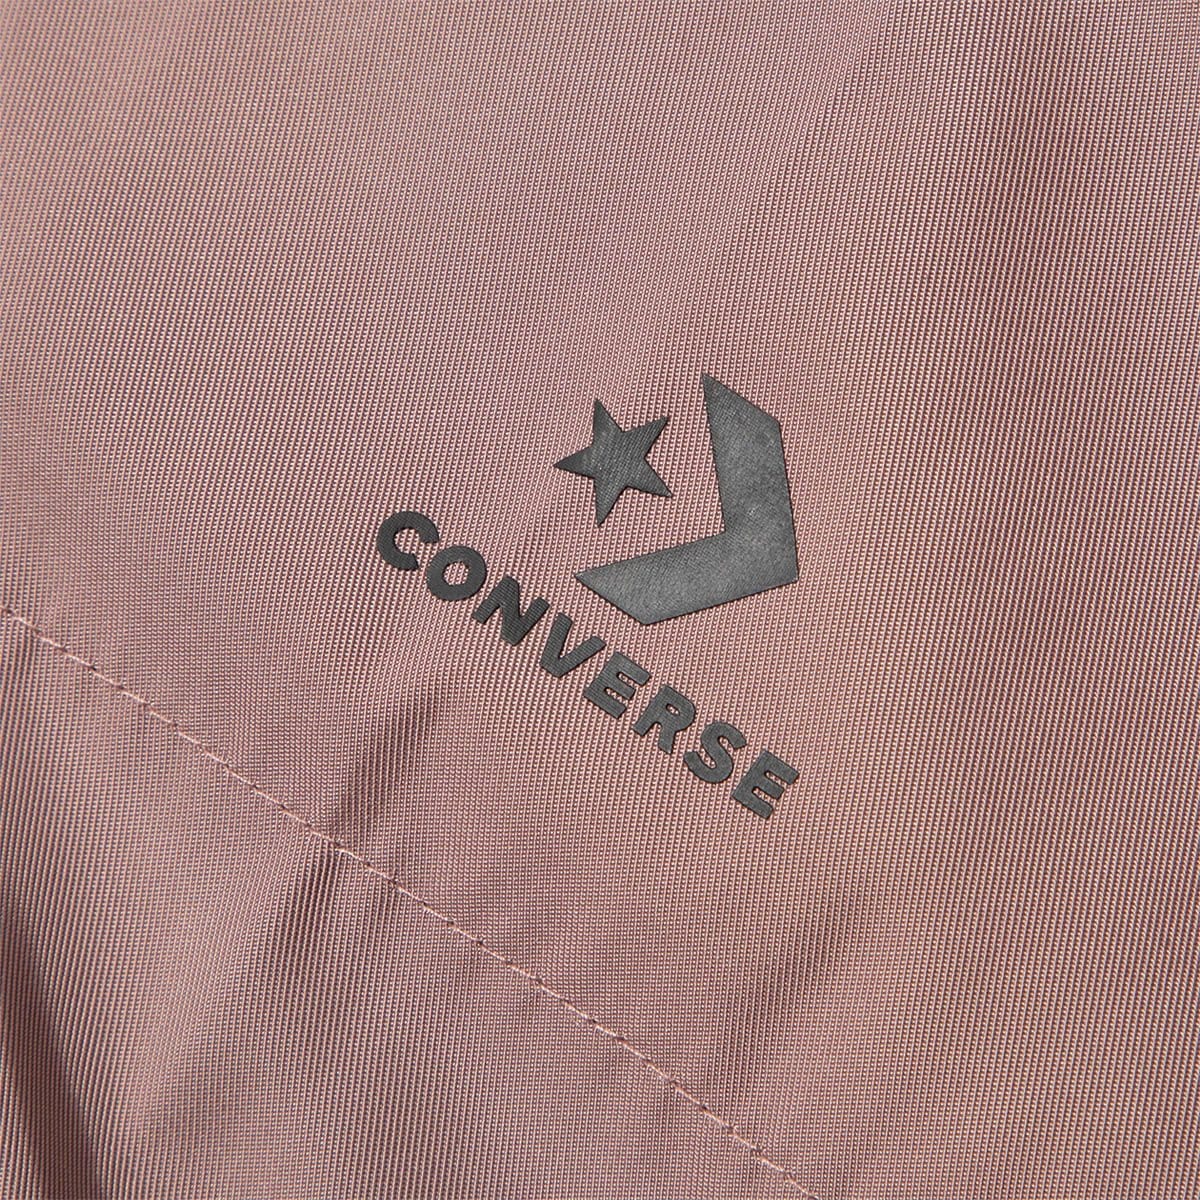 Converse Outerwear x ACW TRACK JACKET